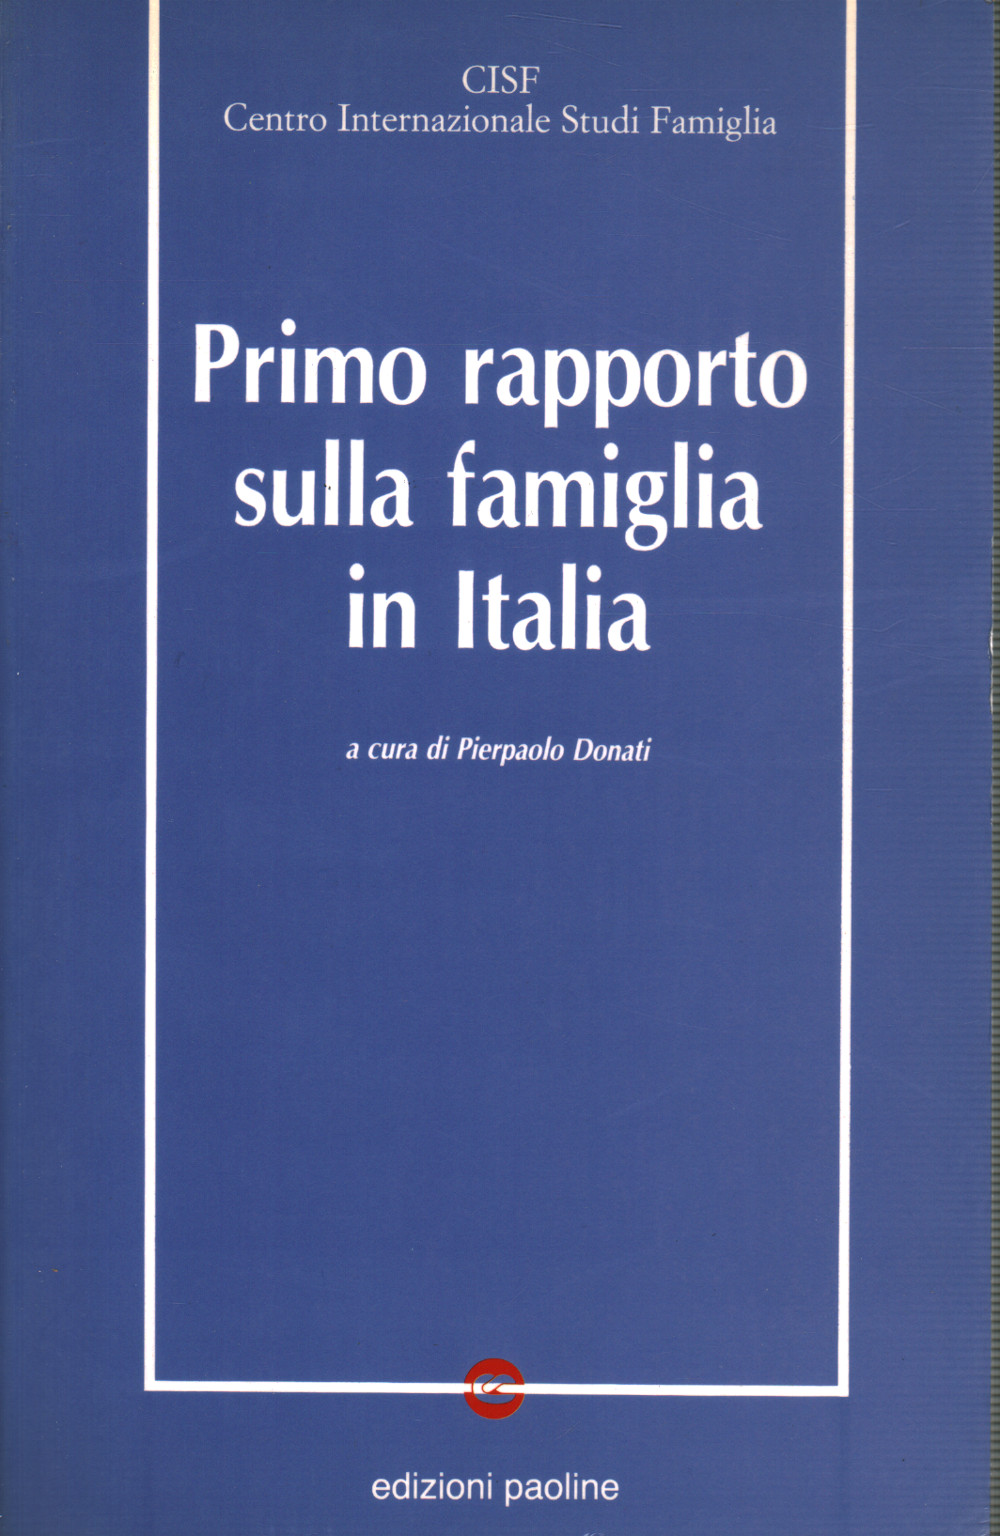 Primer informe sobre la familia en Italia, s.una.